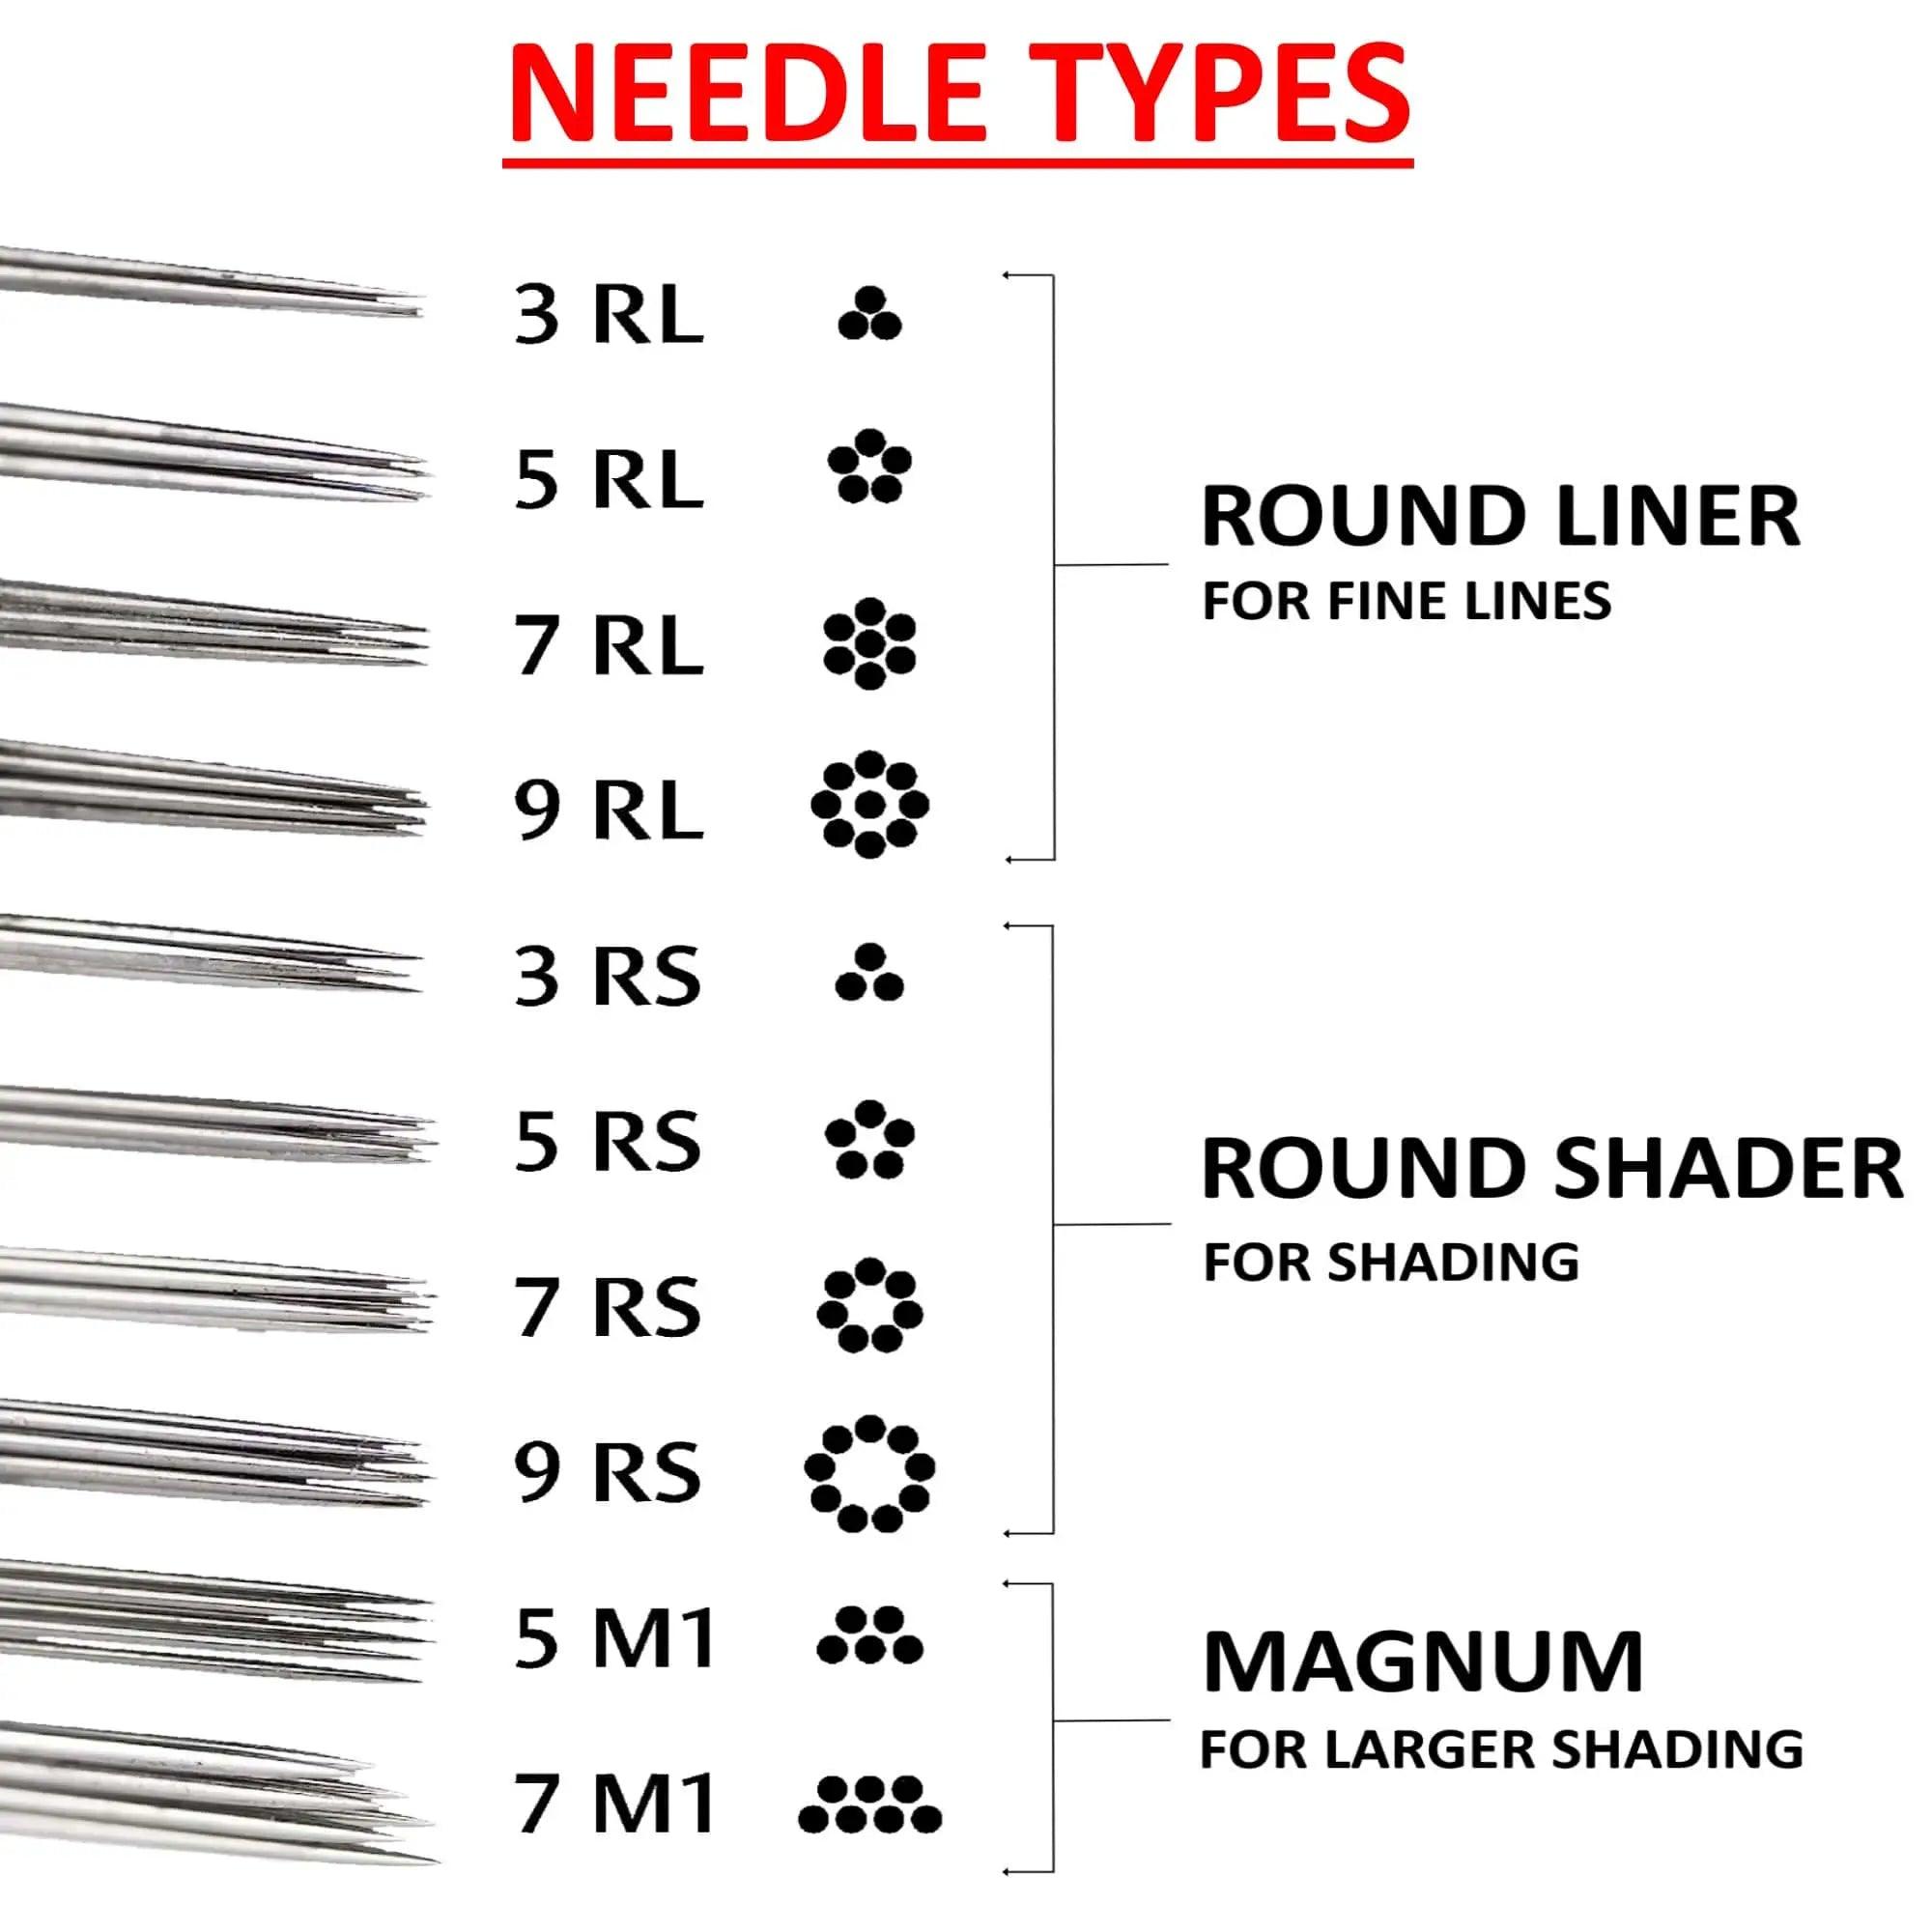 Stick & Poke Tattoo Needles - Round Liners - RL - SINGLE NEEDLE